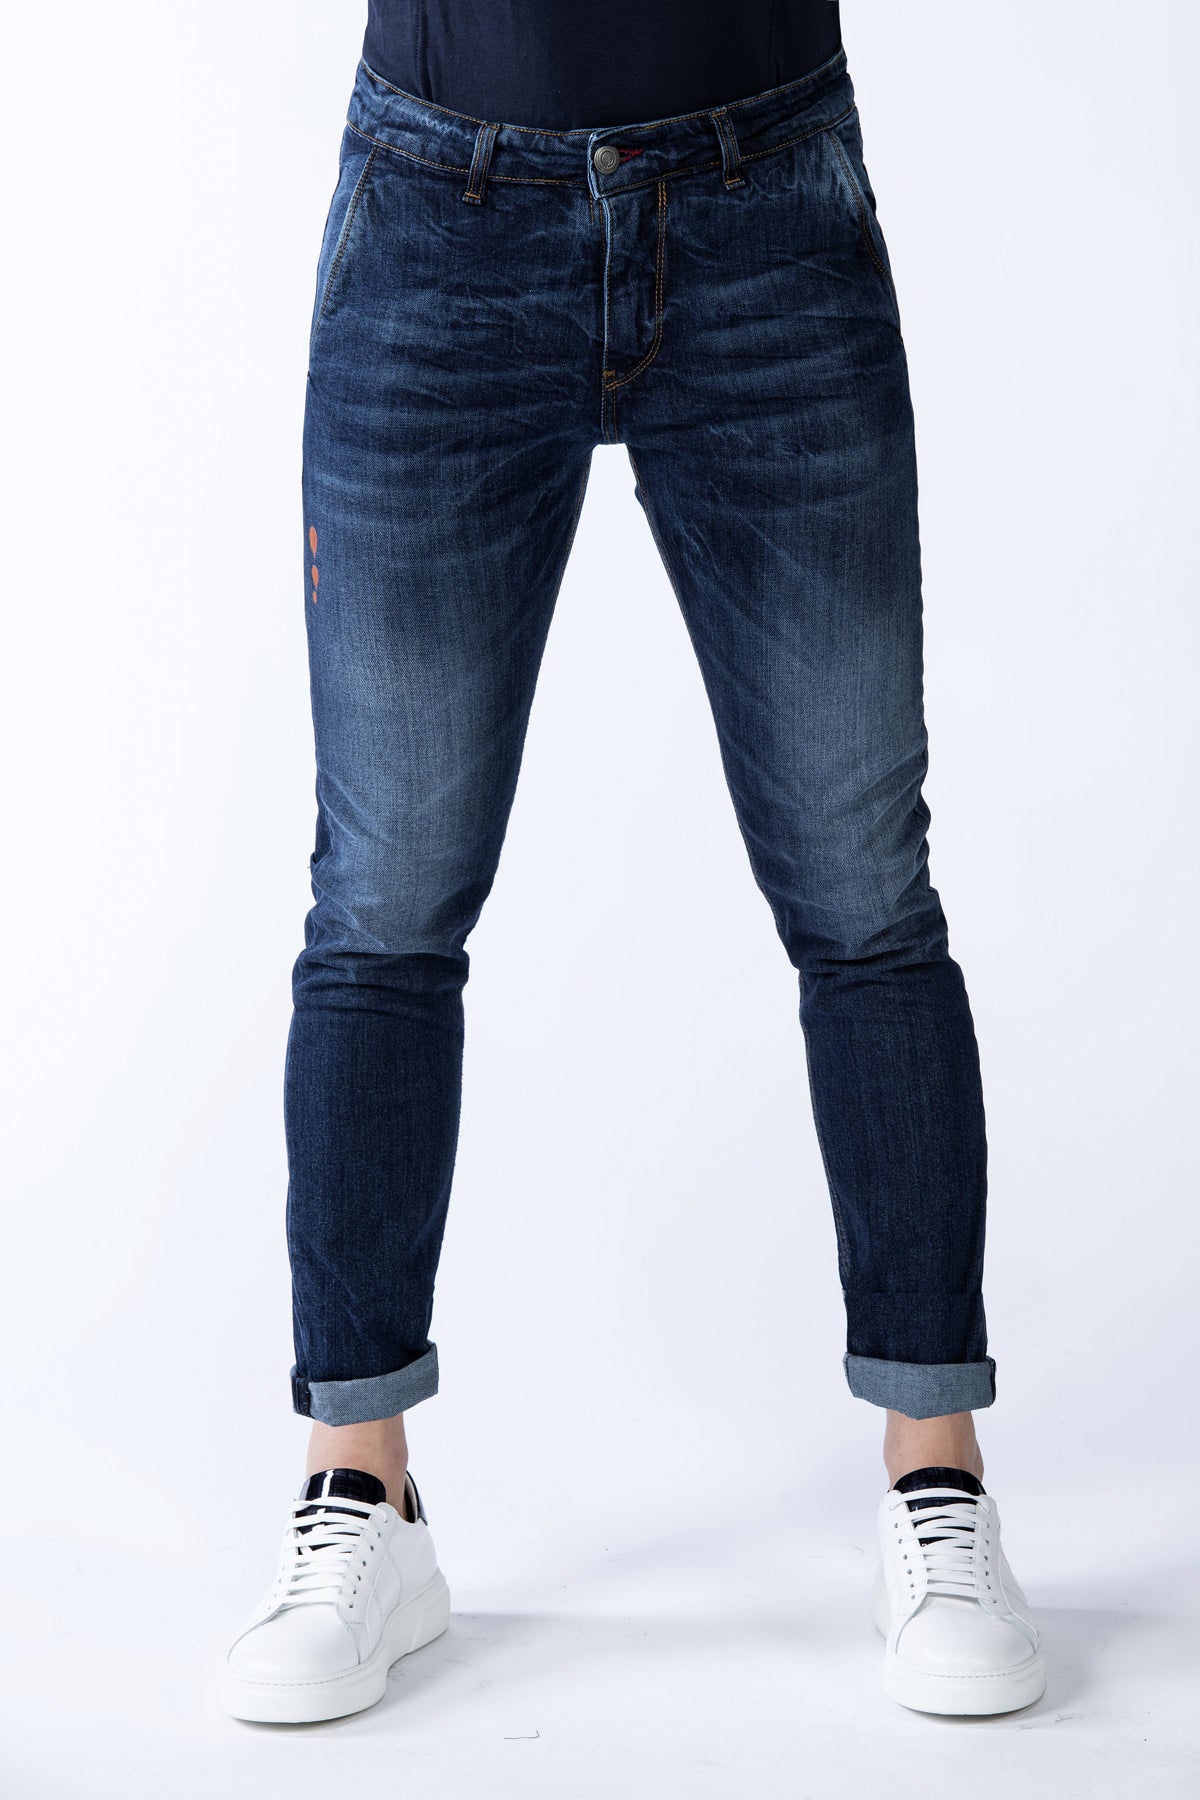 Beckton men's jeans america pocket